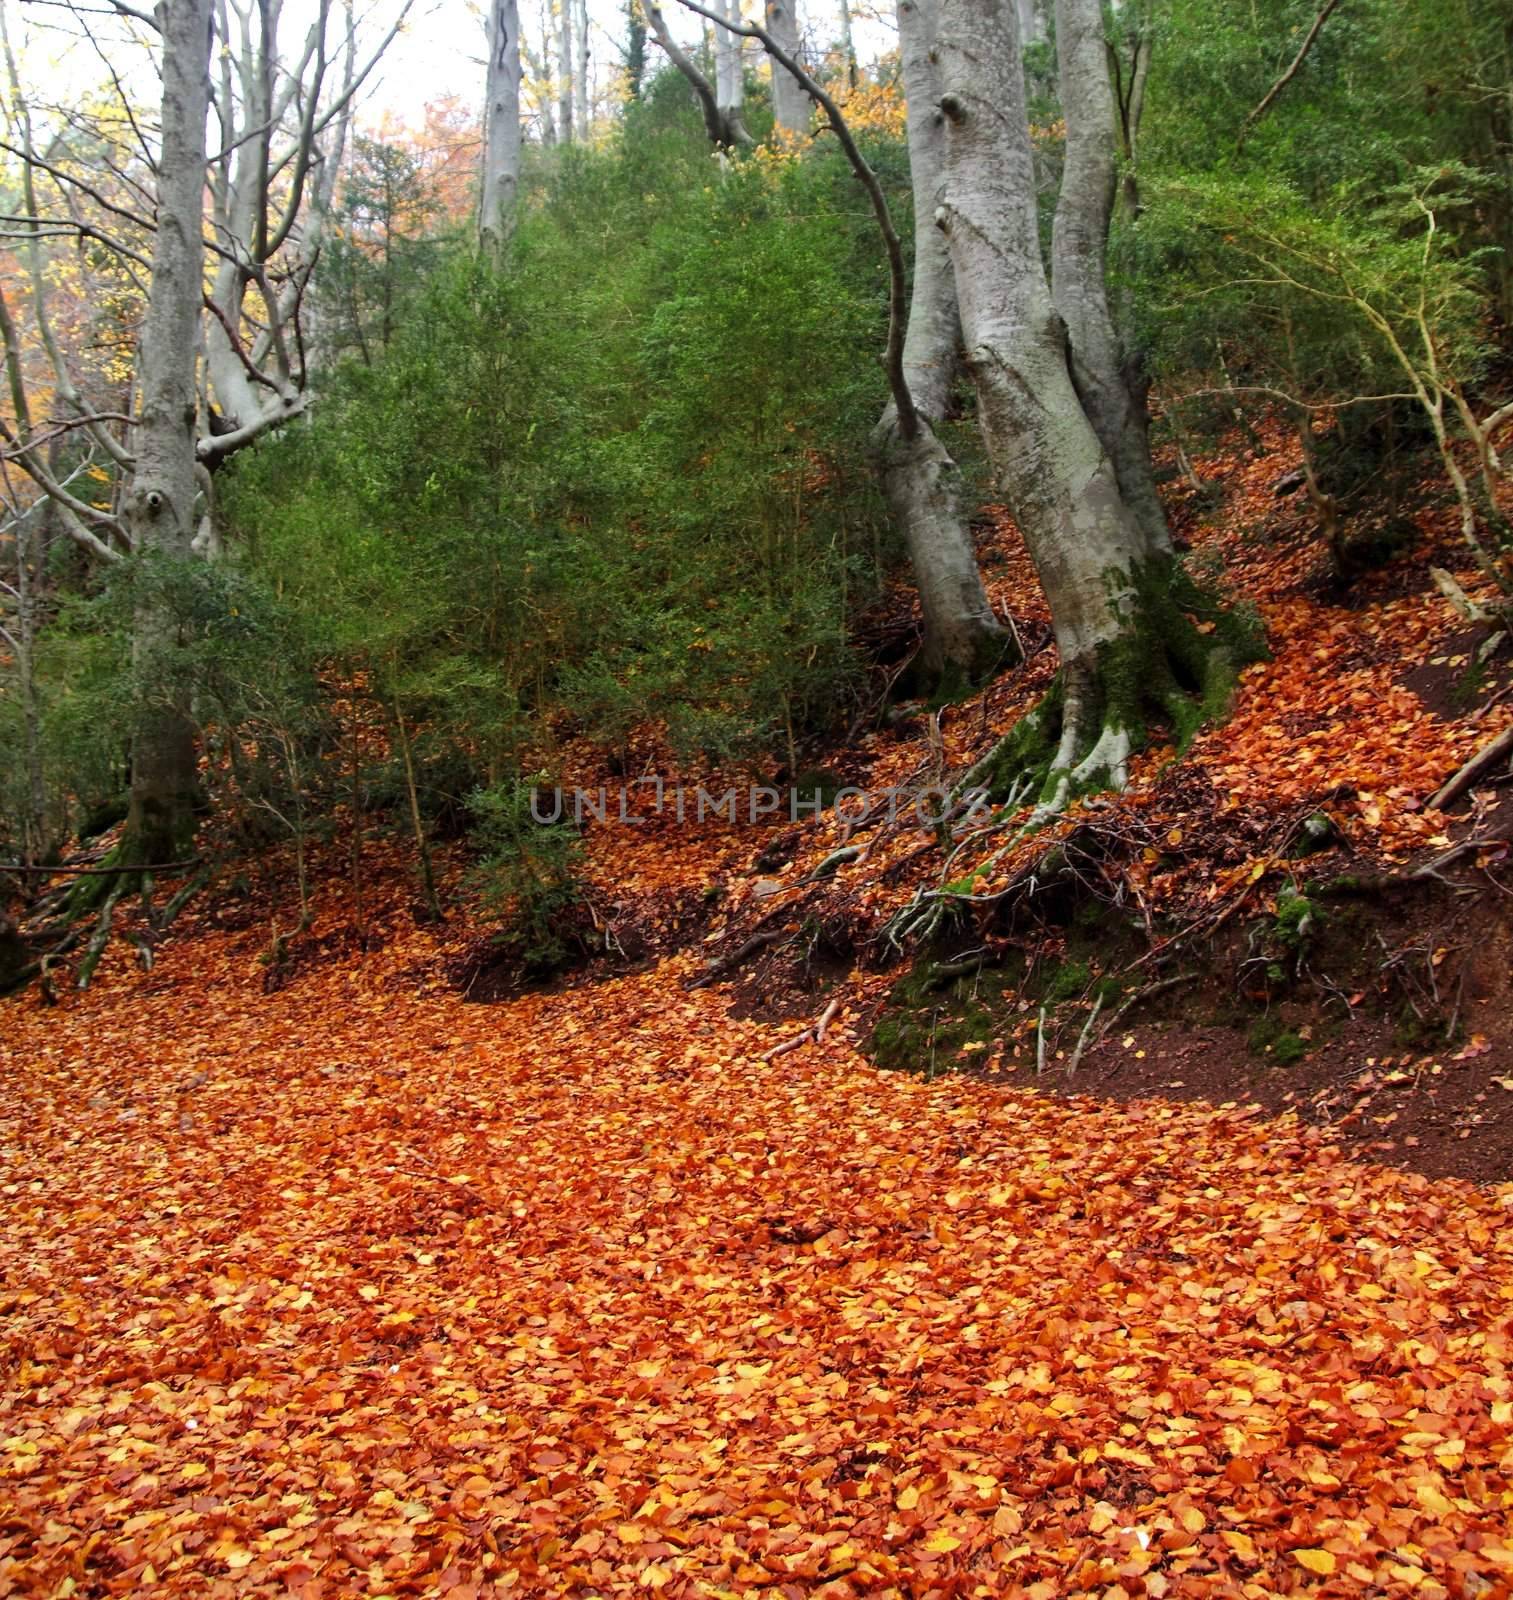 autumn centenary beech tree in fall golden leaves by lunamarina